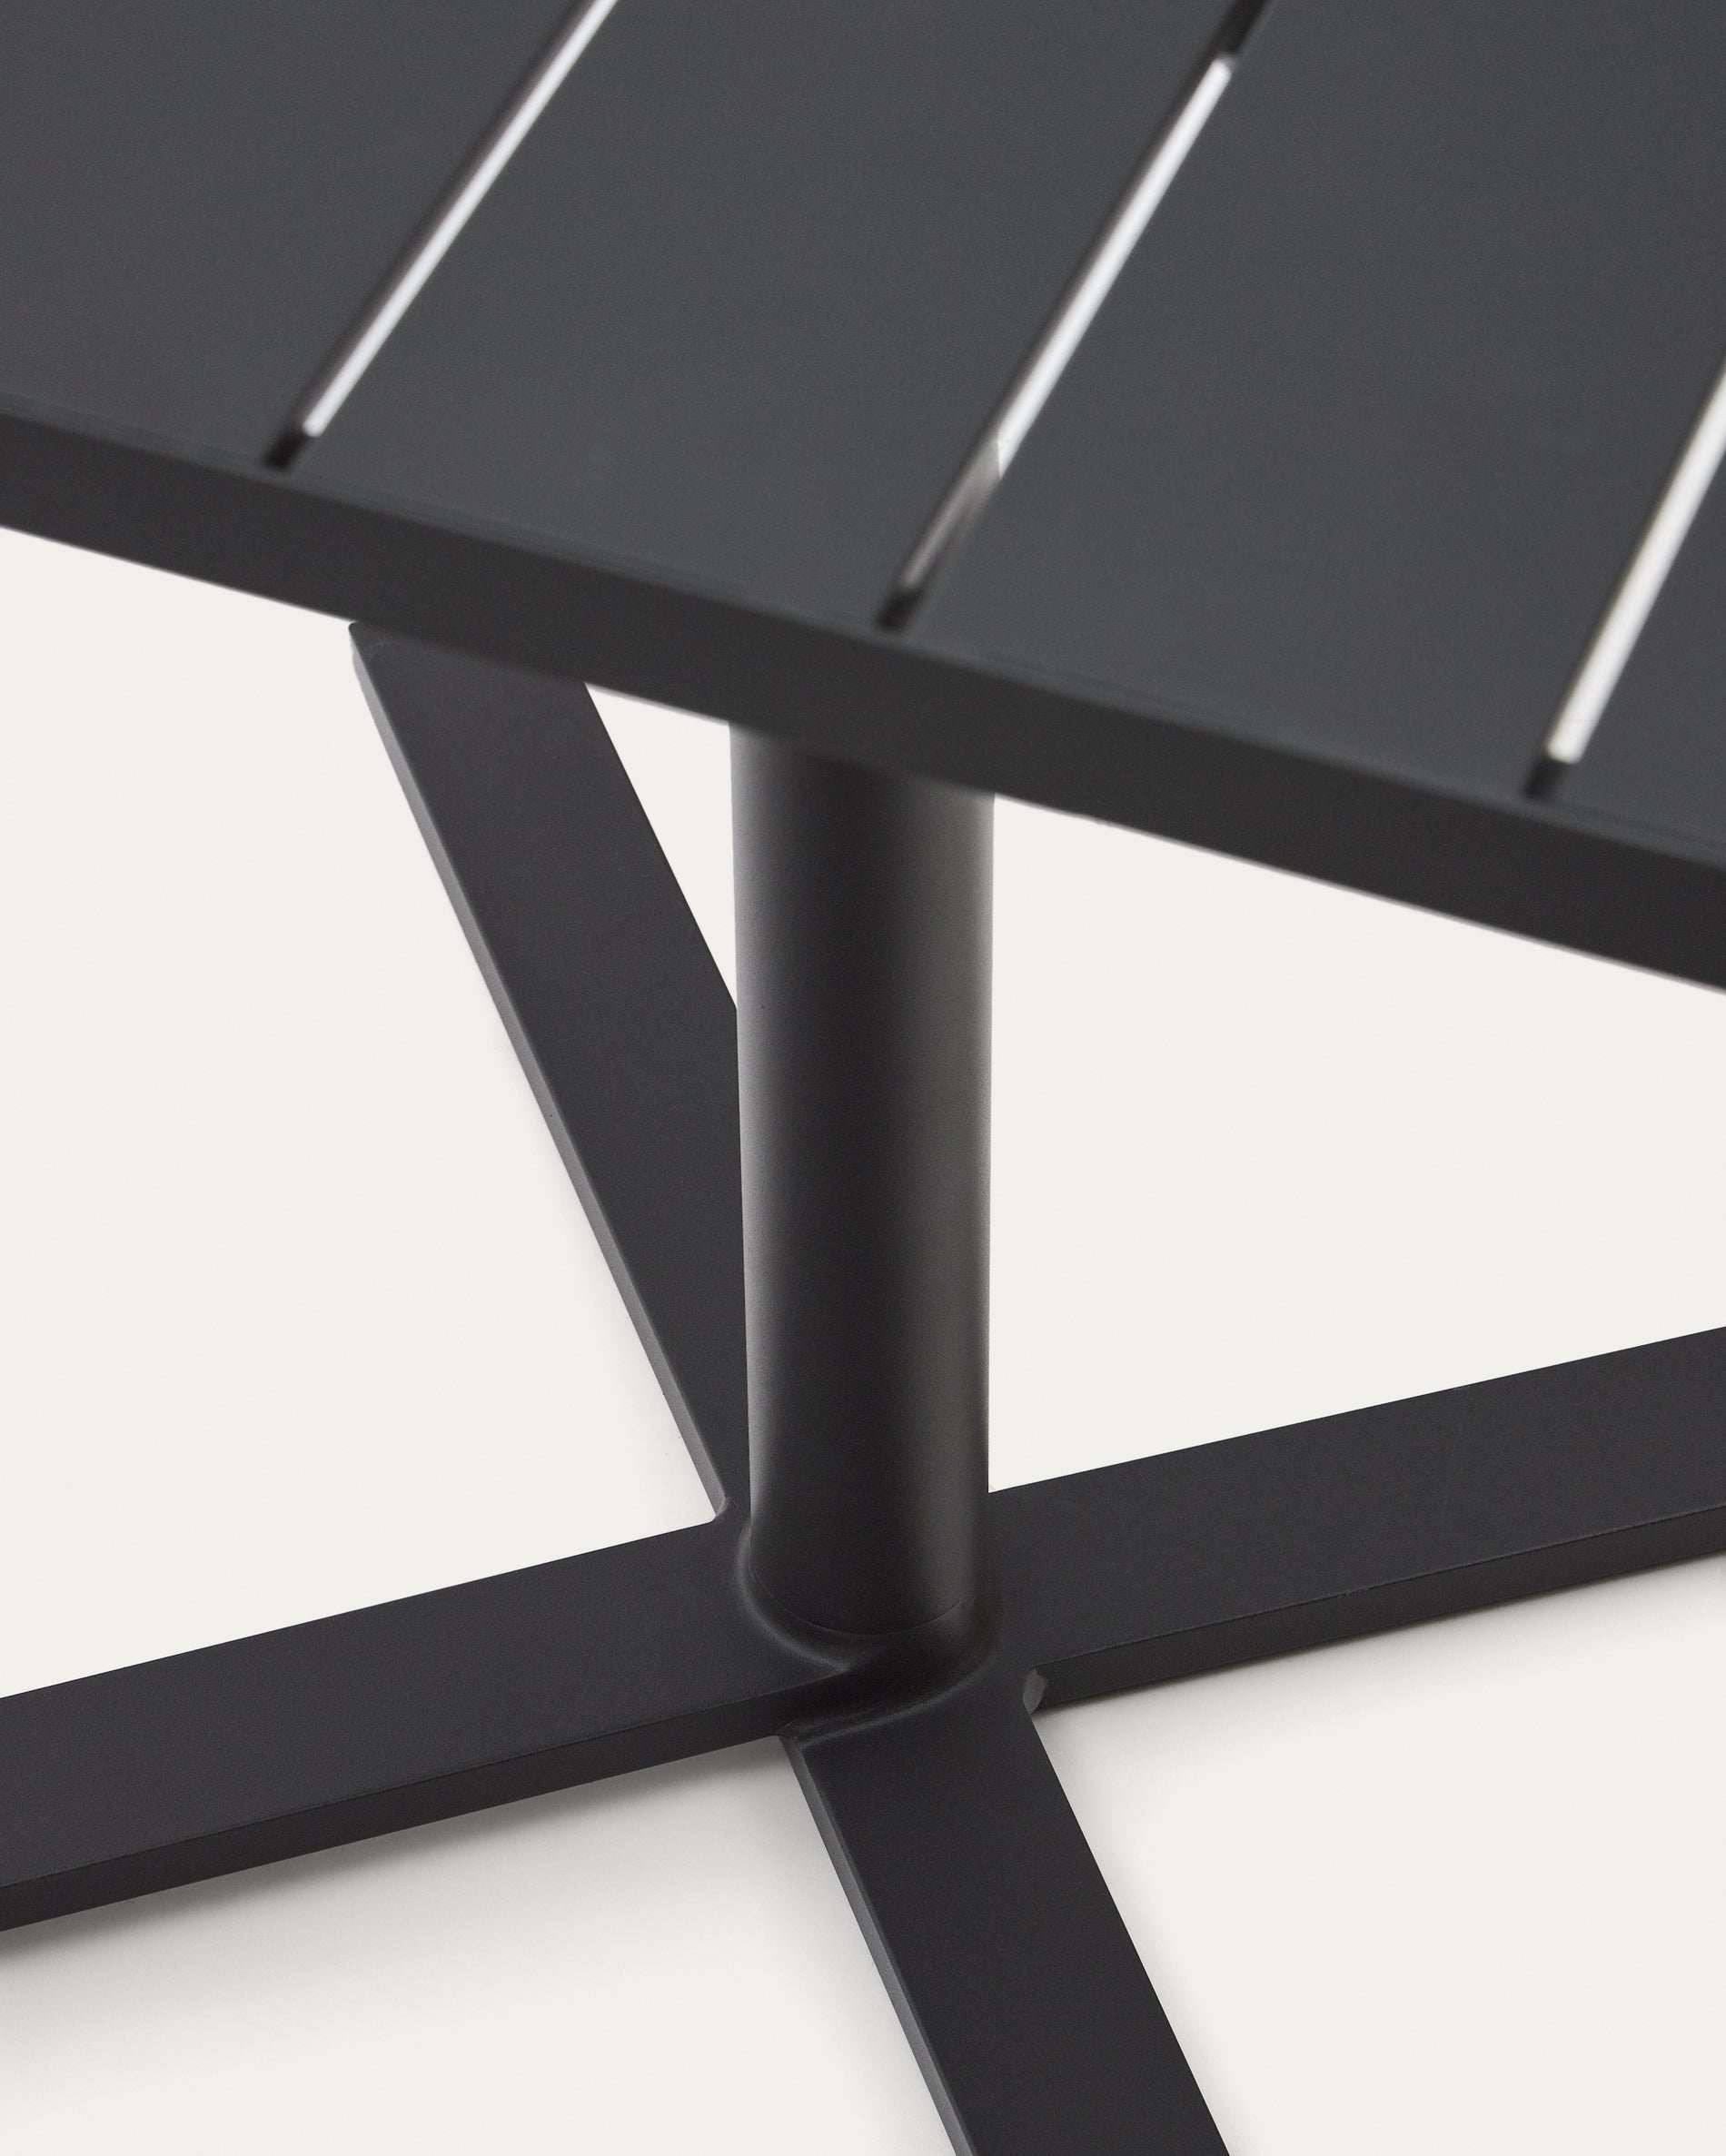 Torreta folding outdoor table made of aluminum with black coating 70 x 70 cm